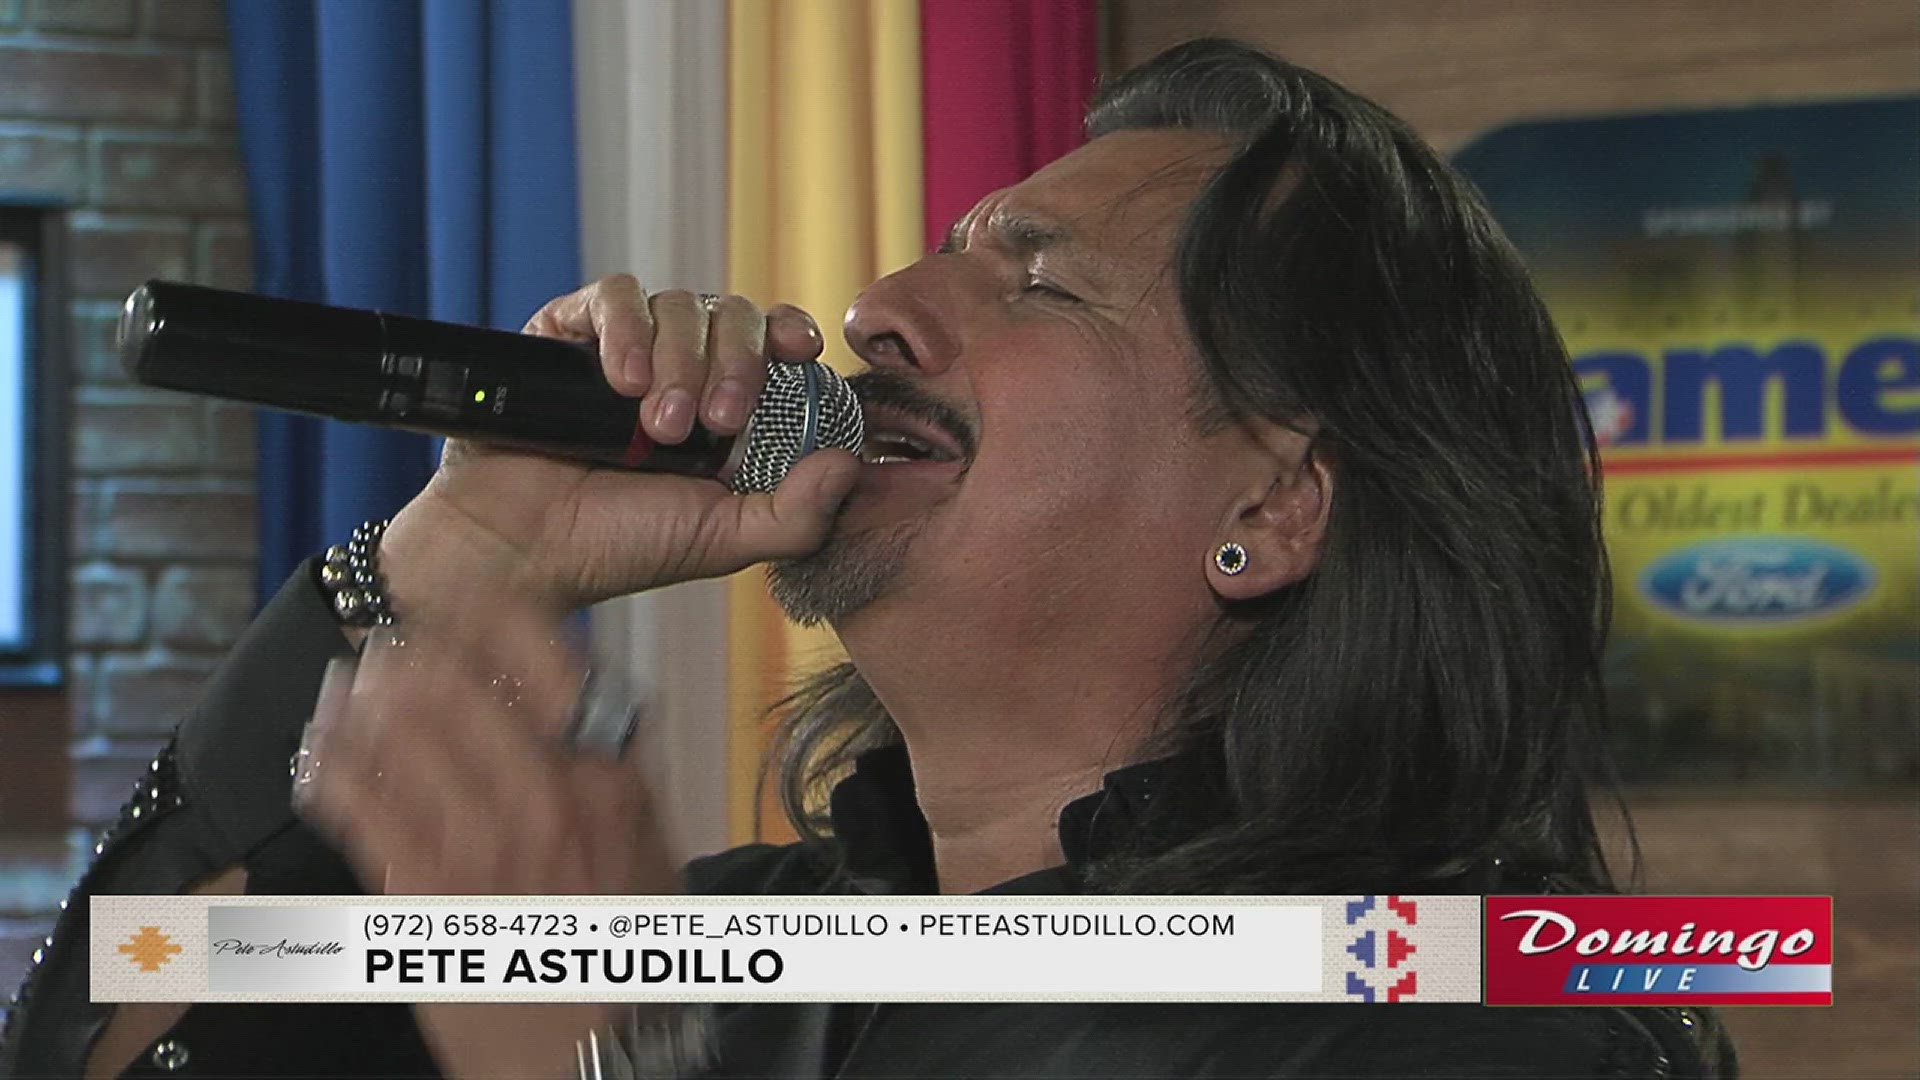 Pete Astudillo joined us on Domingo Live to perform his upcoming single "Esta Es Pa' Mi Raza."